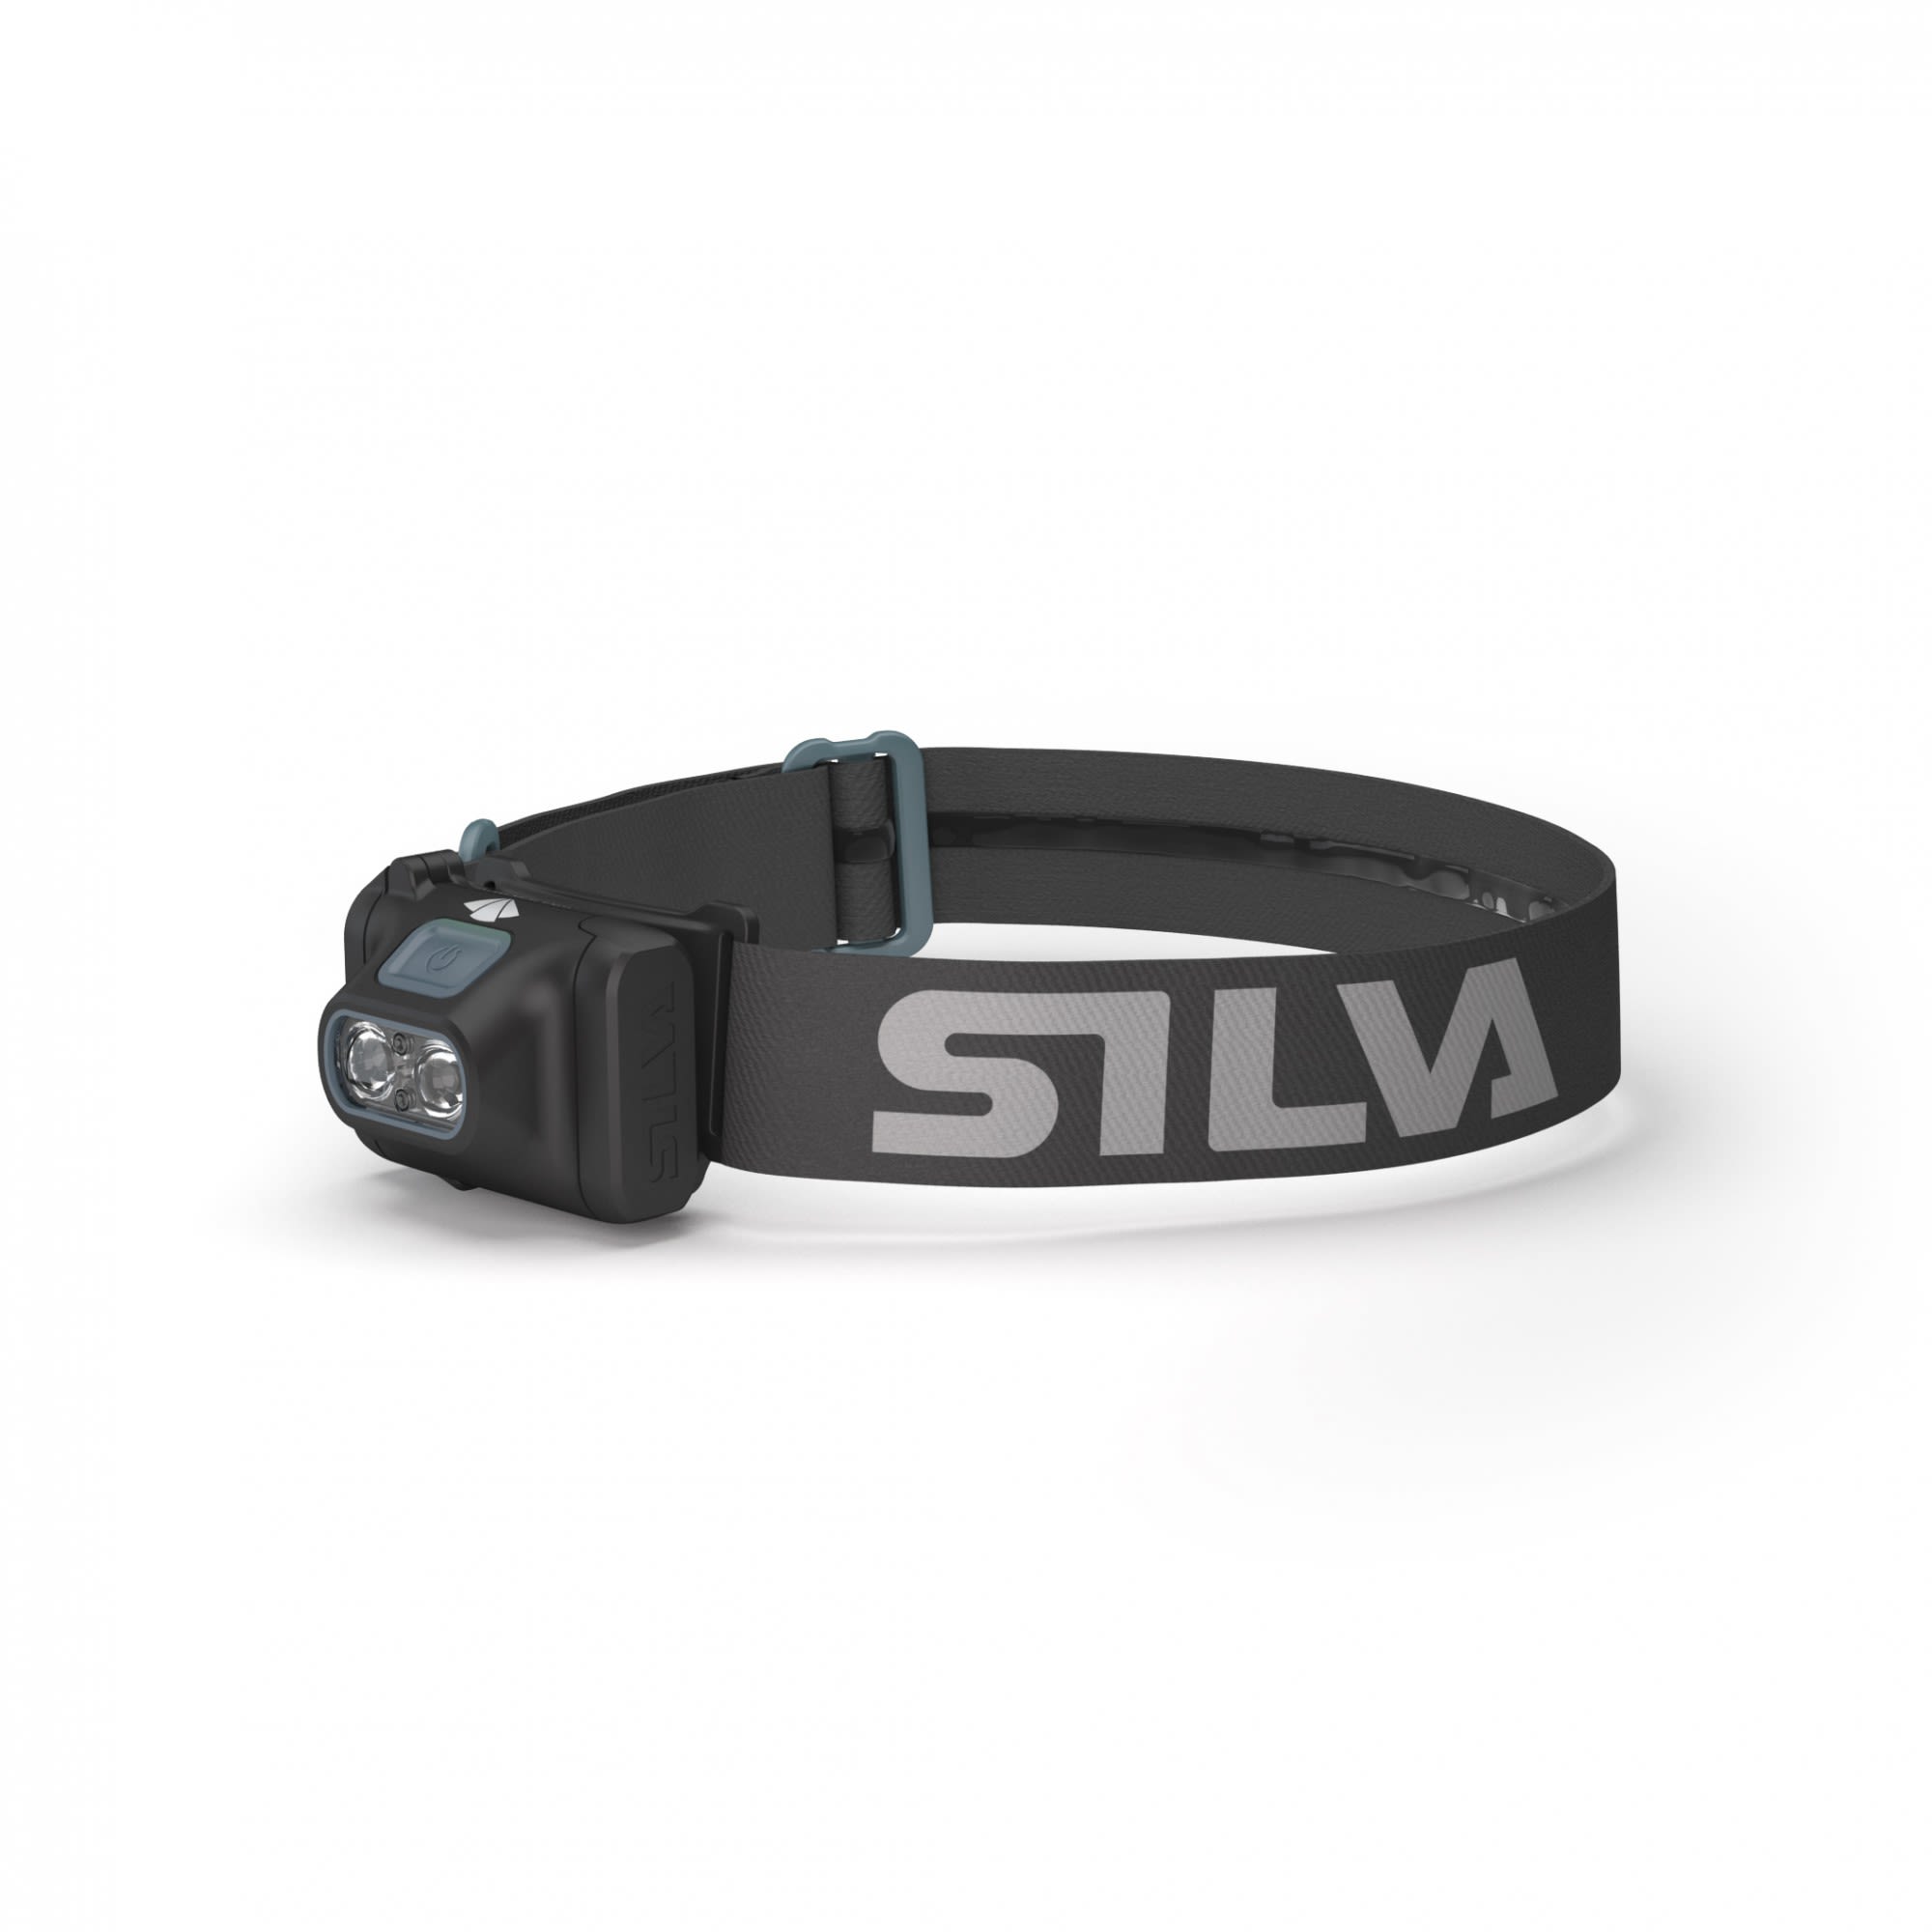 Silva Scout 3xth Schwarz- Stirnlampen- Grsse One Size - Farbe Black - Blue